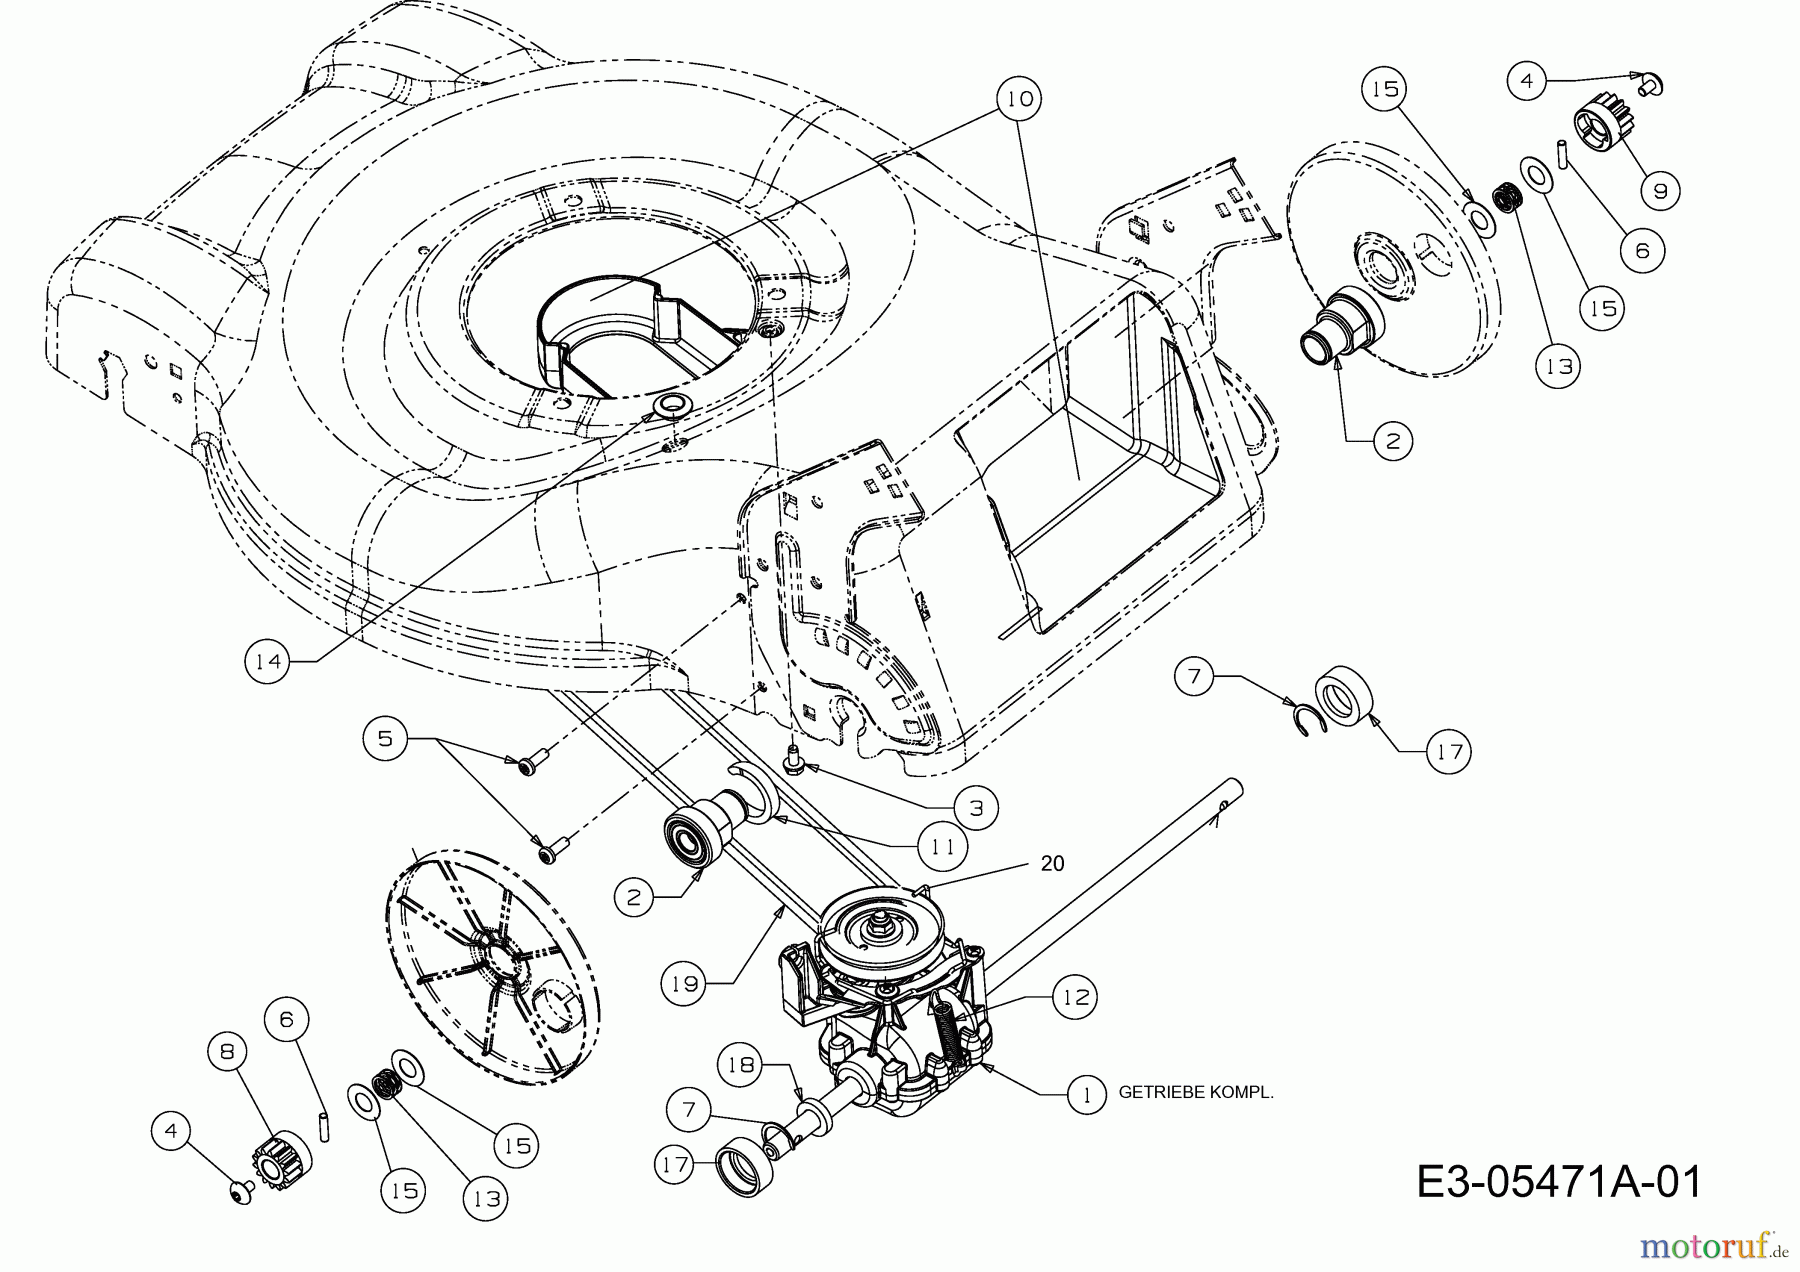  Lux Tools Petrol mower self propelled B 46 MA 12D-J54H694  (2010) Gearbox